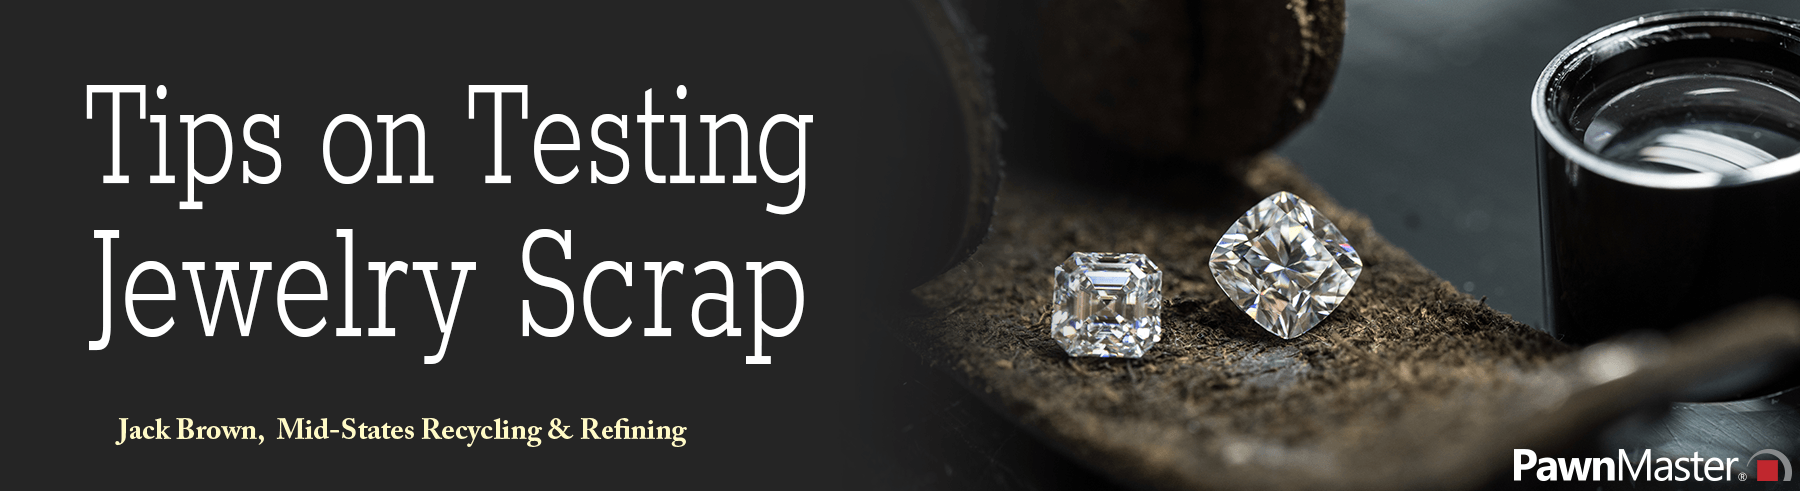 header-Tips on Testing Jewelry Scrap